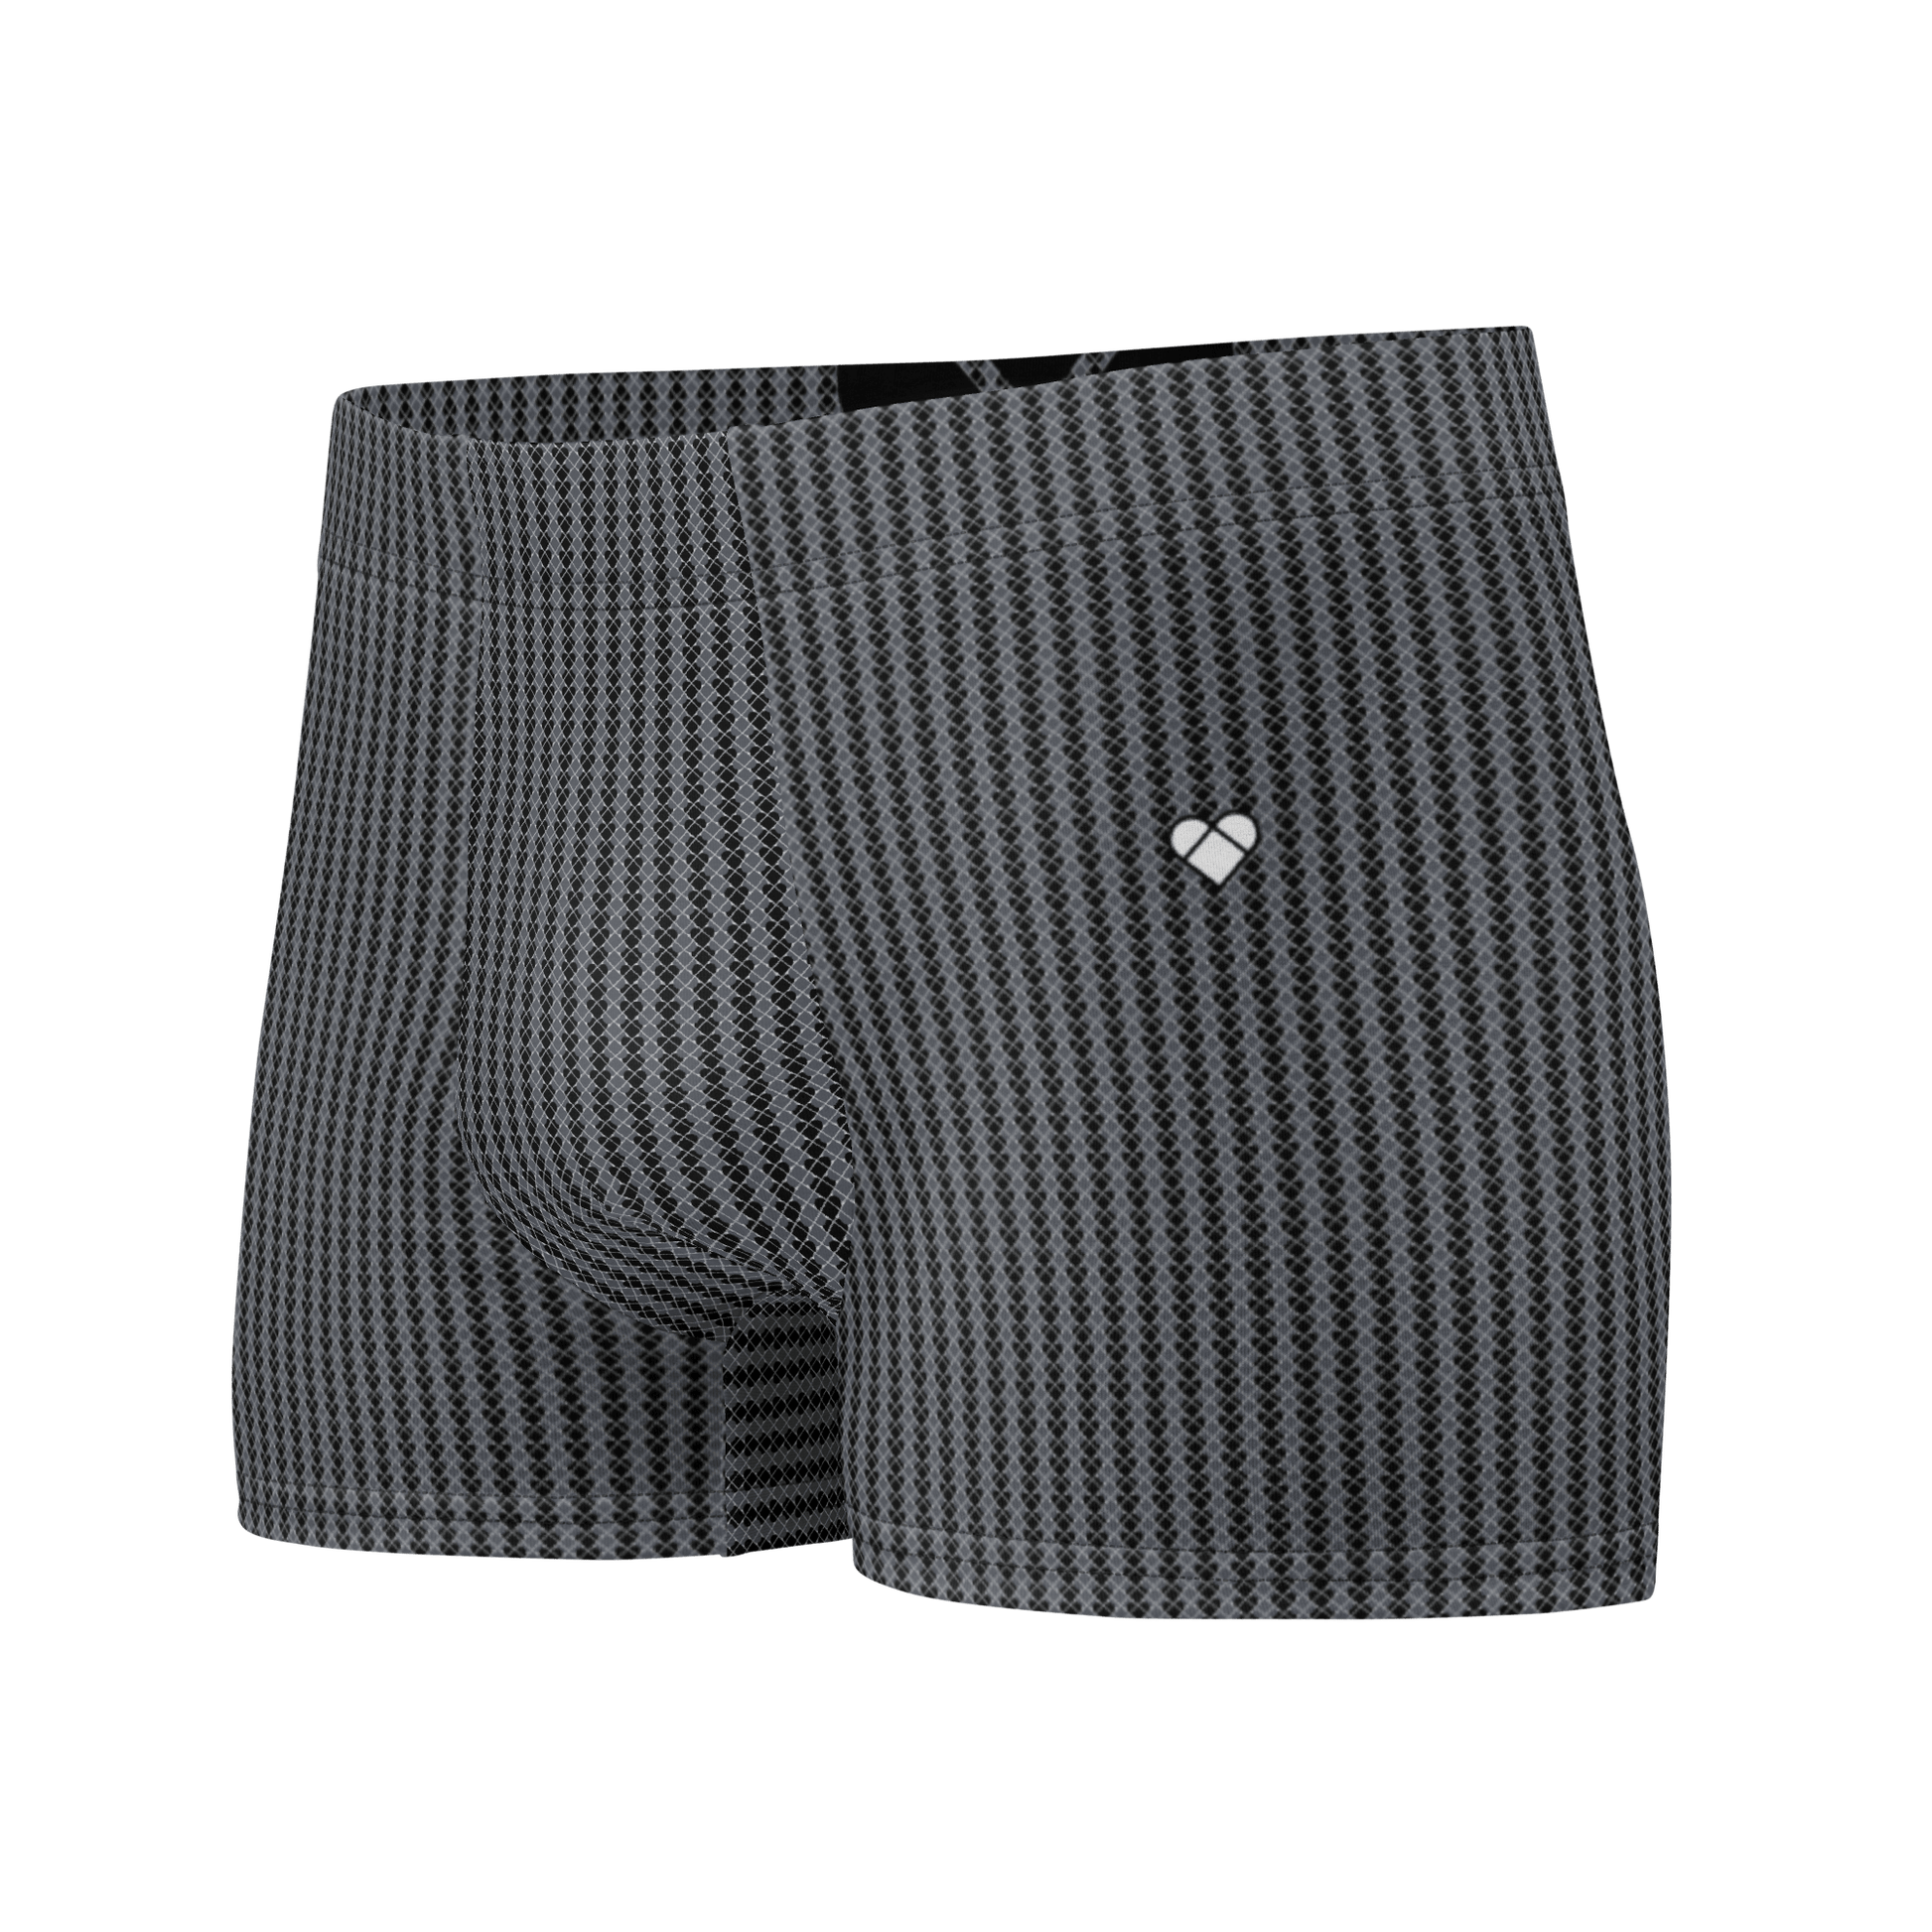 CRiZ AMOR's Lovogram: Innovative men's underwear with geometric heart pattern